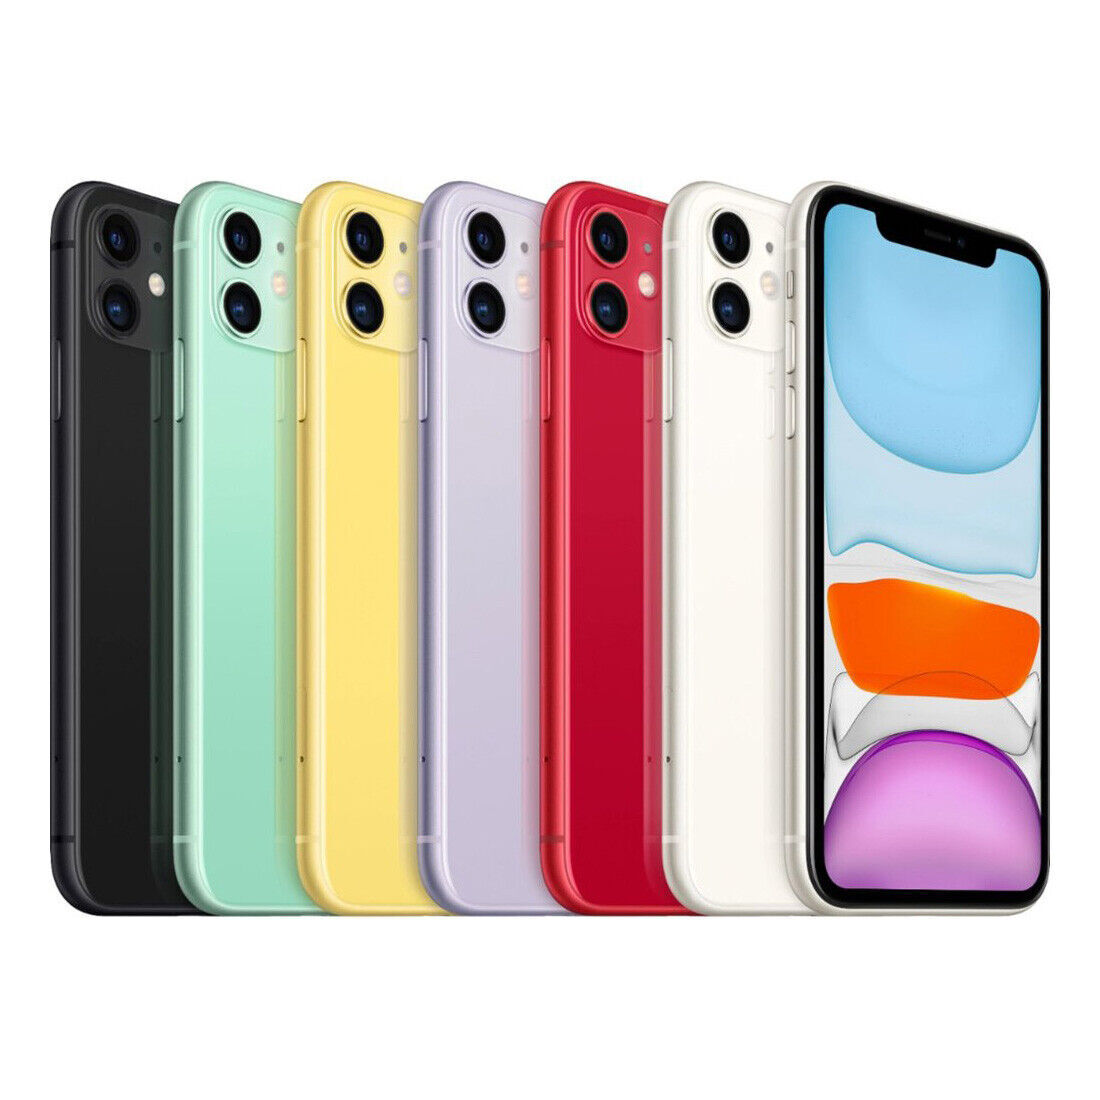 Apple iPhone 11 - 128GB - Factory Unlocked - All Colors - Bundle - Good